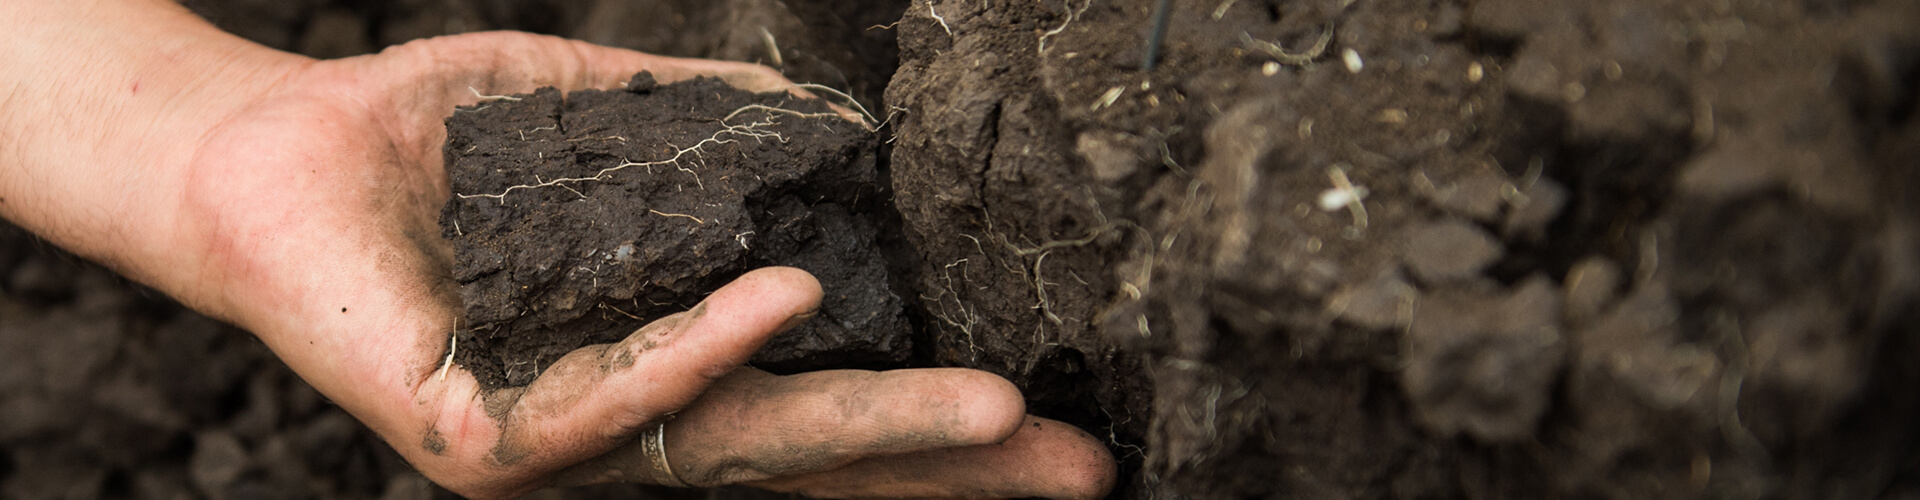 organics soil